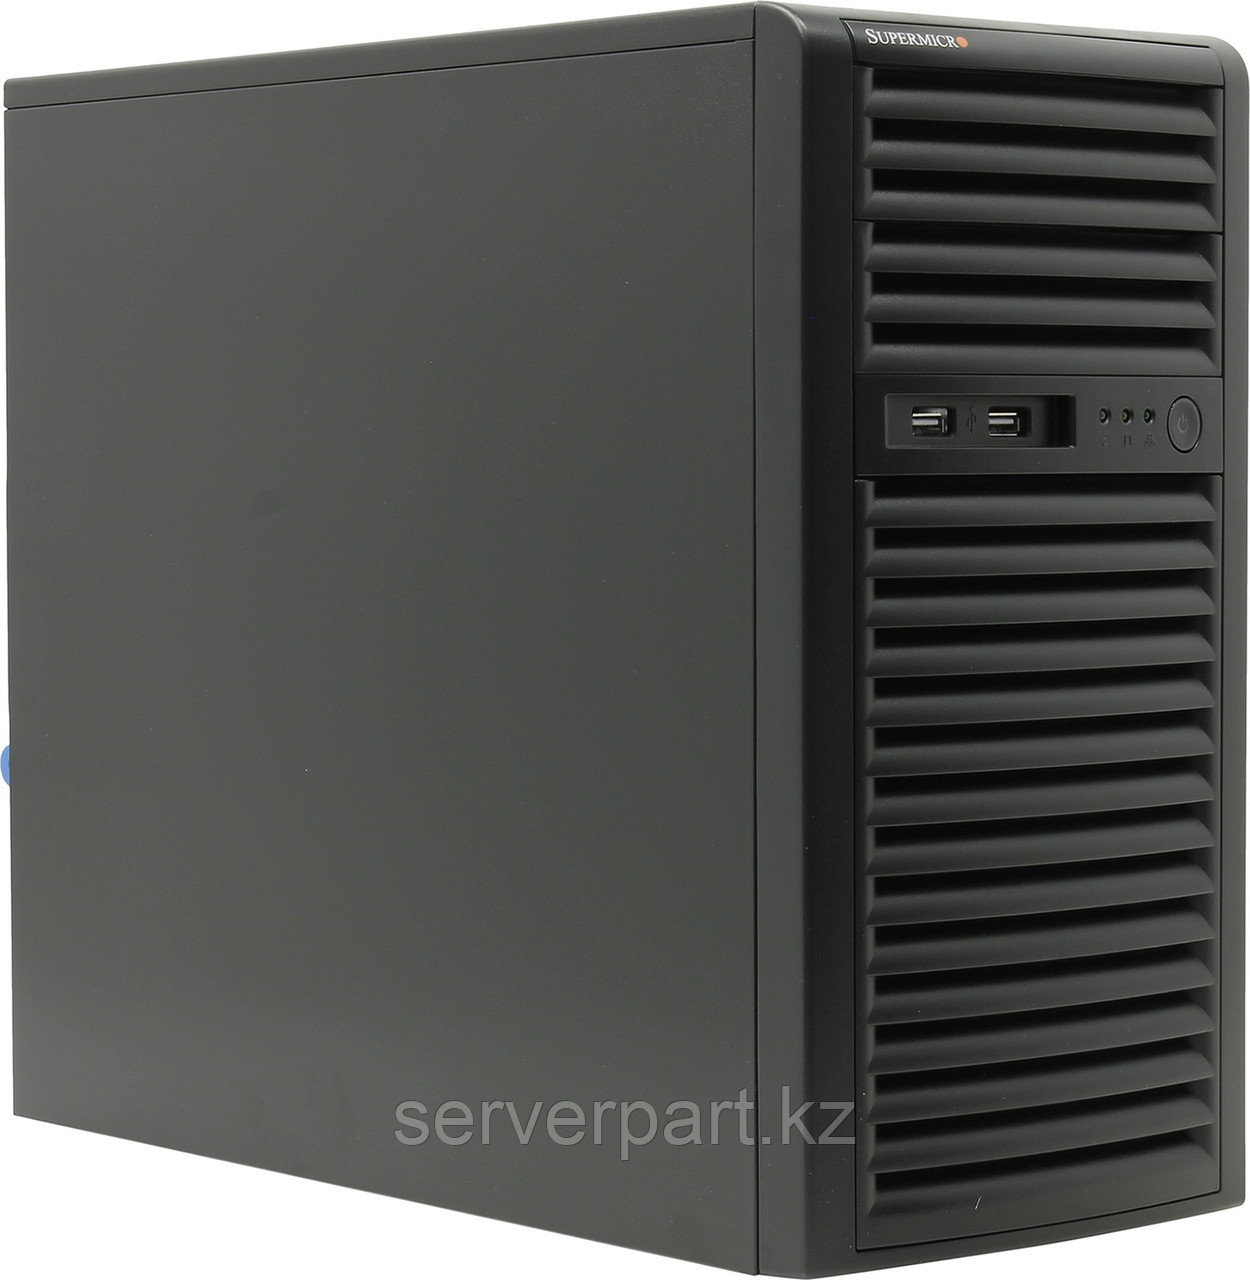 Сервер Supermicro SYS-5039C (Tower 4LFF)/4-core intel xeon E2224 (3.4GHz)/48GB EUDIMM, фото 1